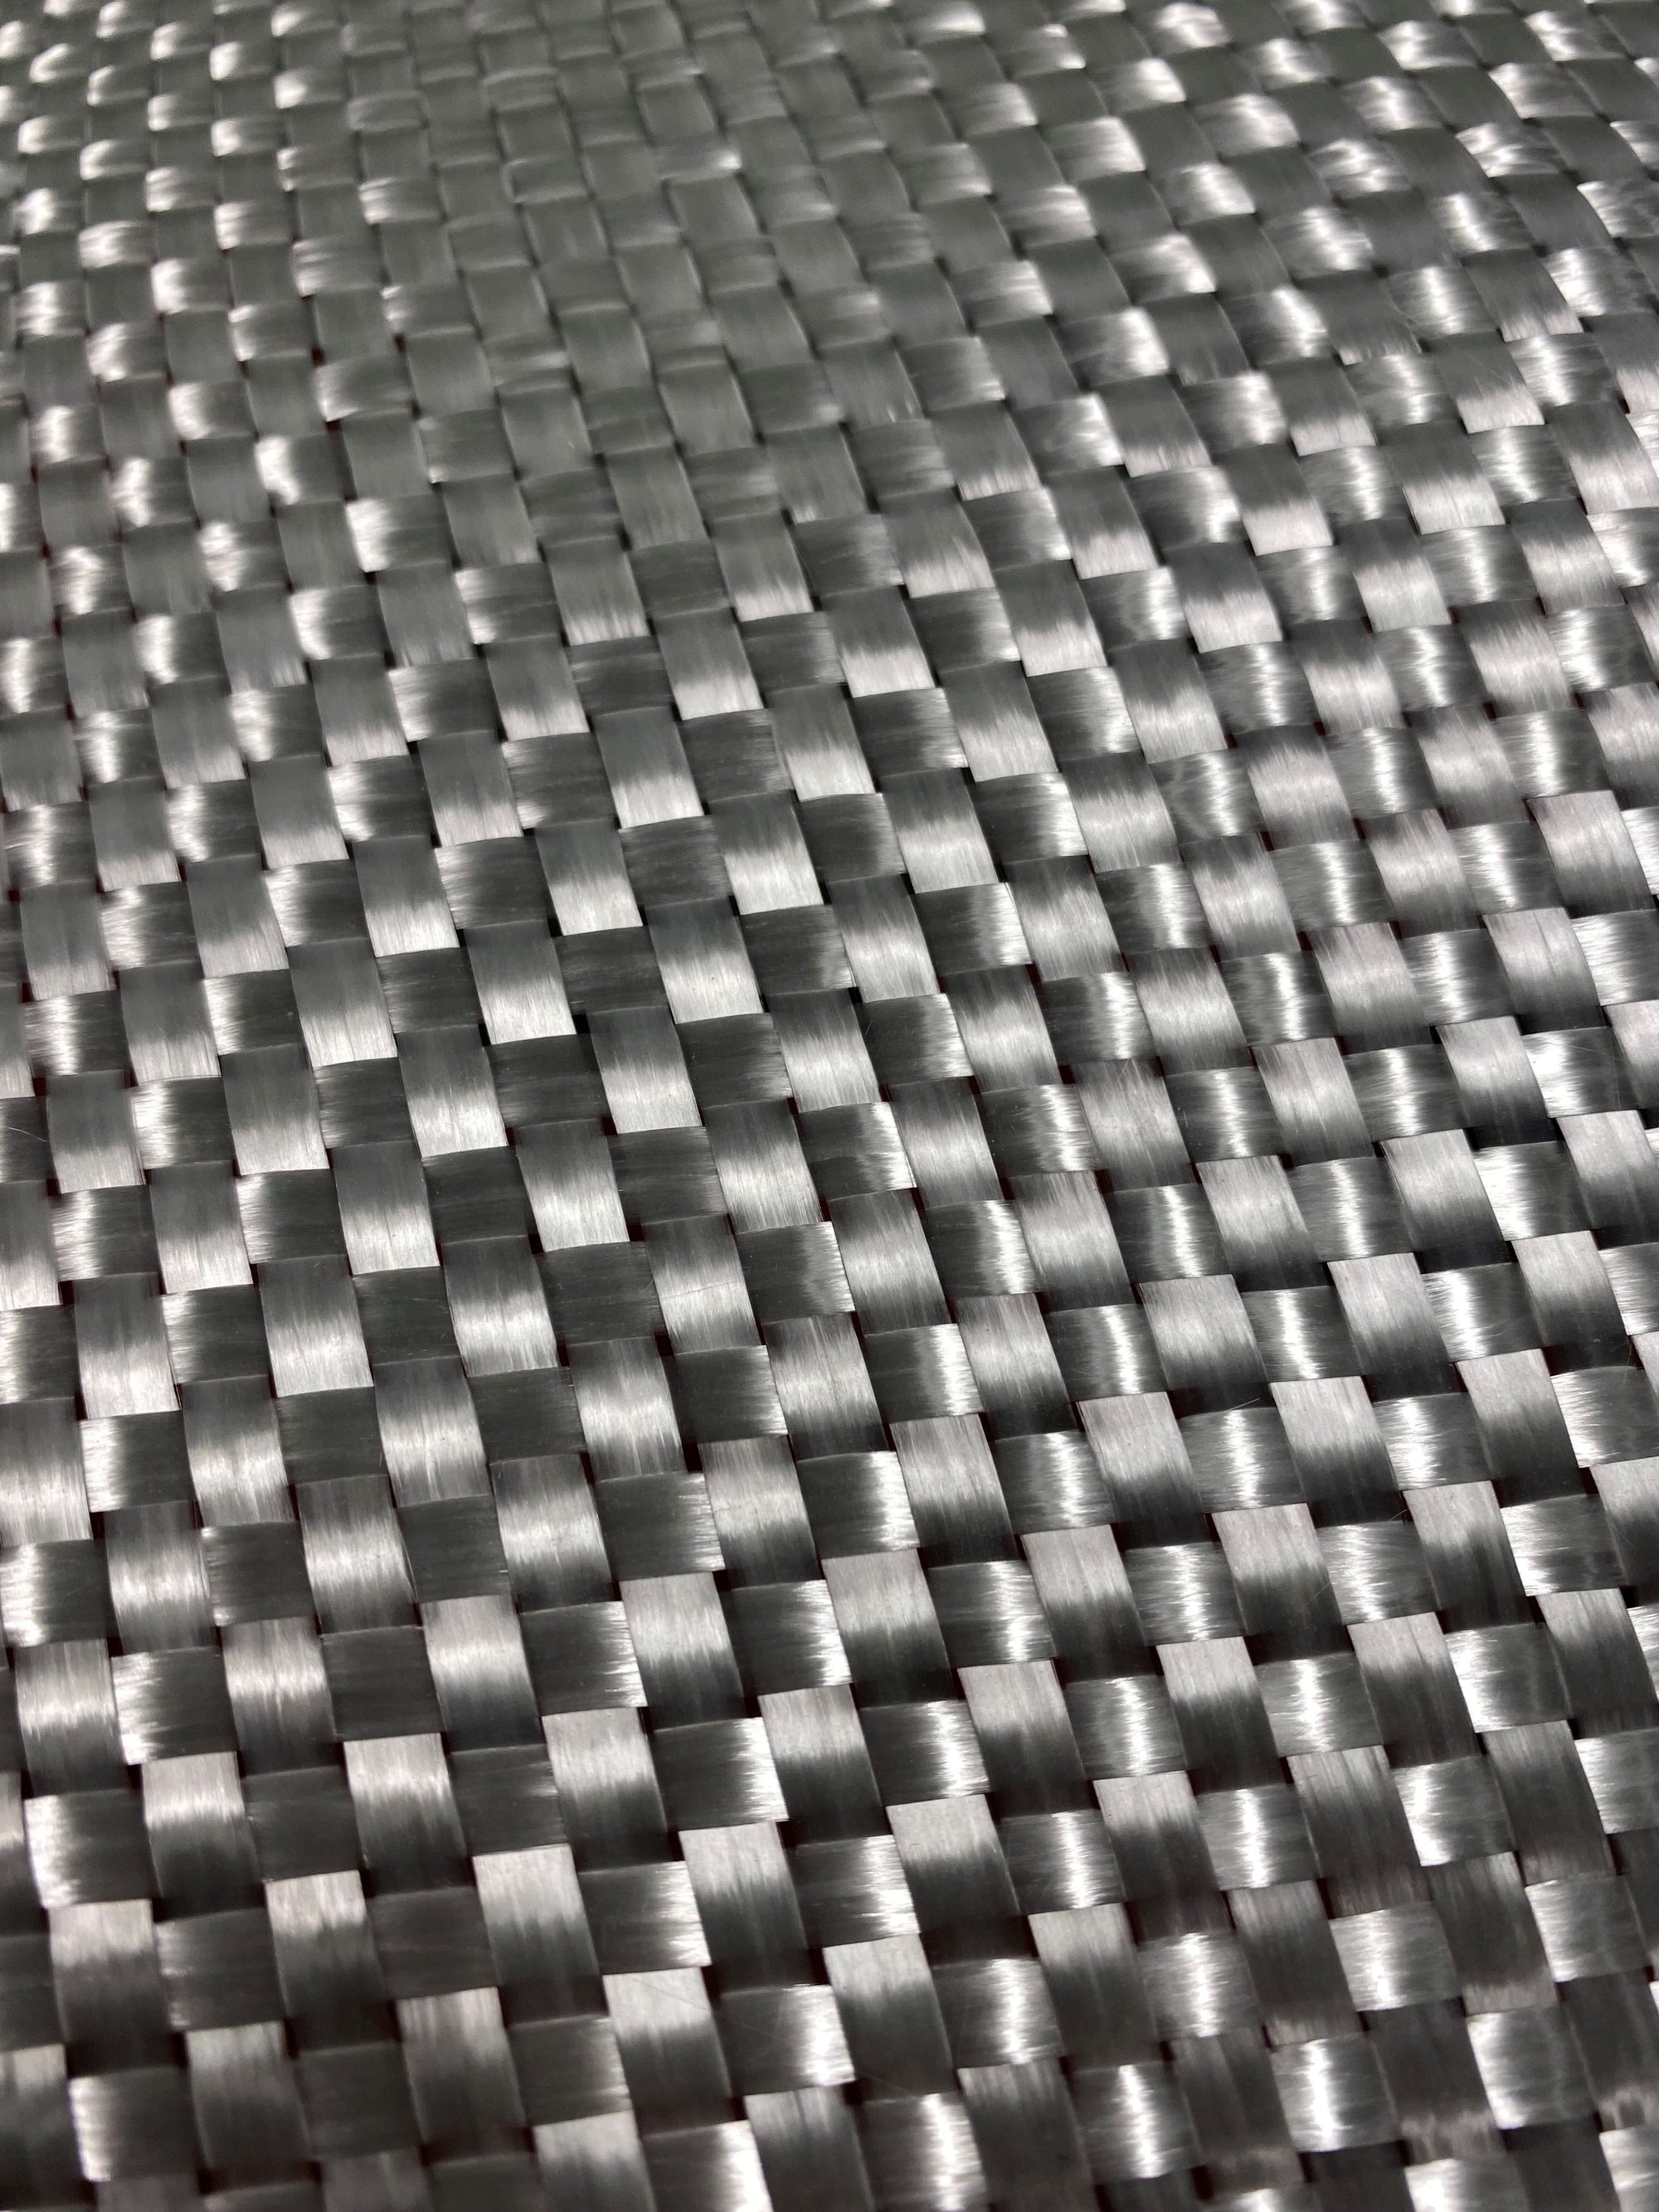 Carbon Fiber/Tan Kevlar Fabric 4x4 Twill 3k/1500d 50/127cm 7.8oz/260gsm